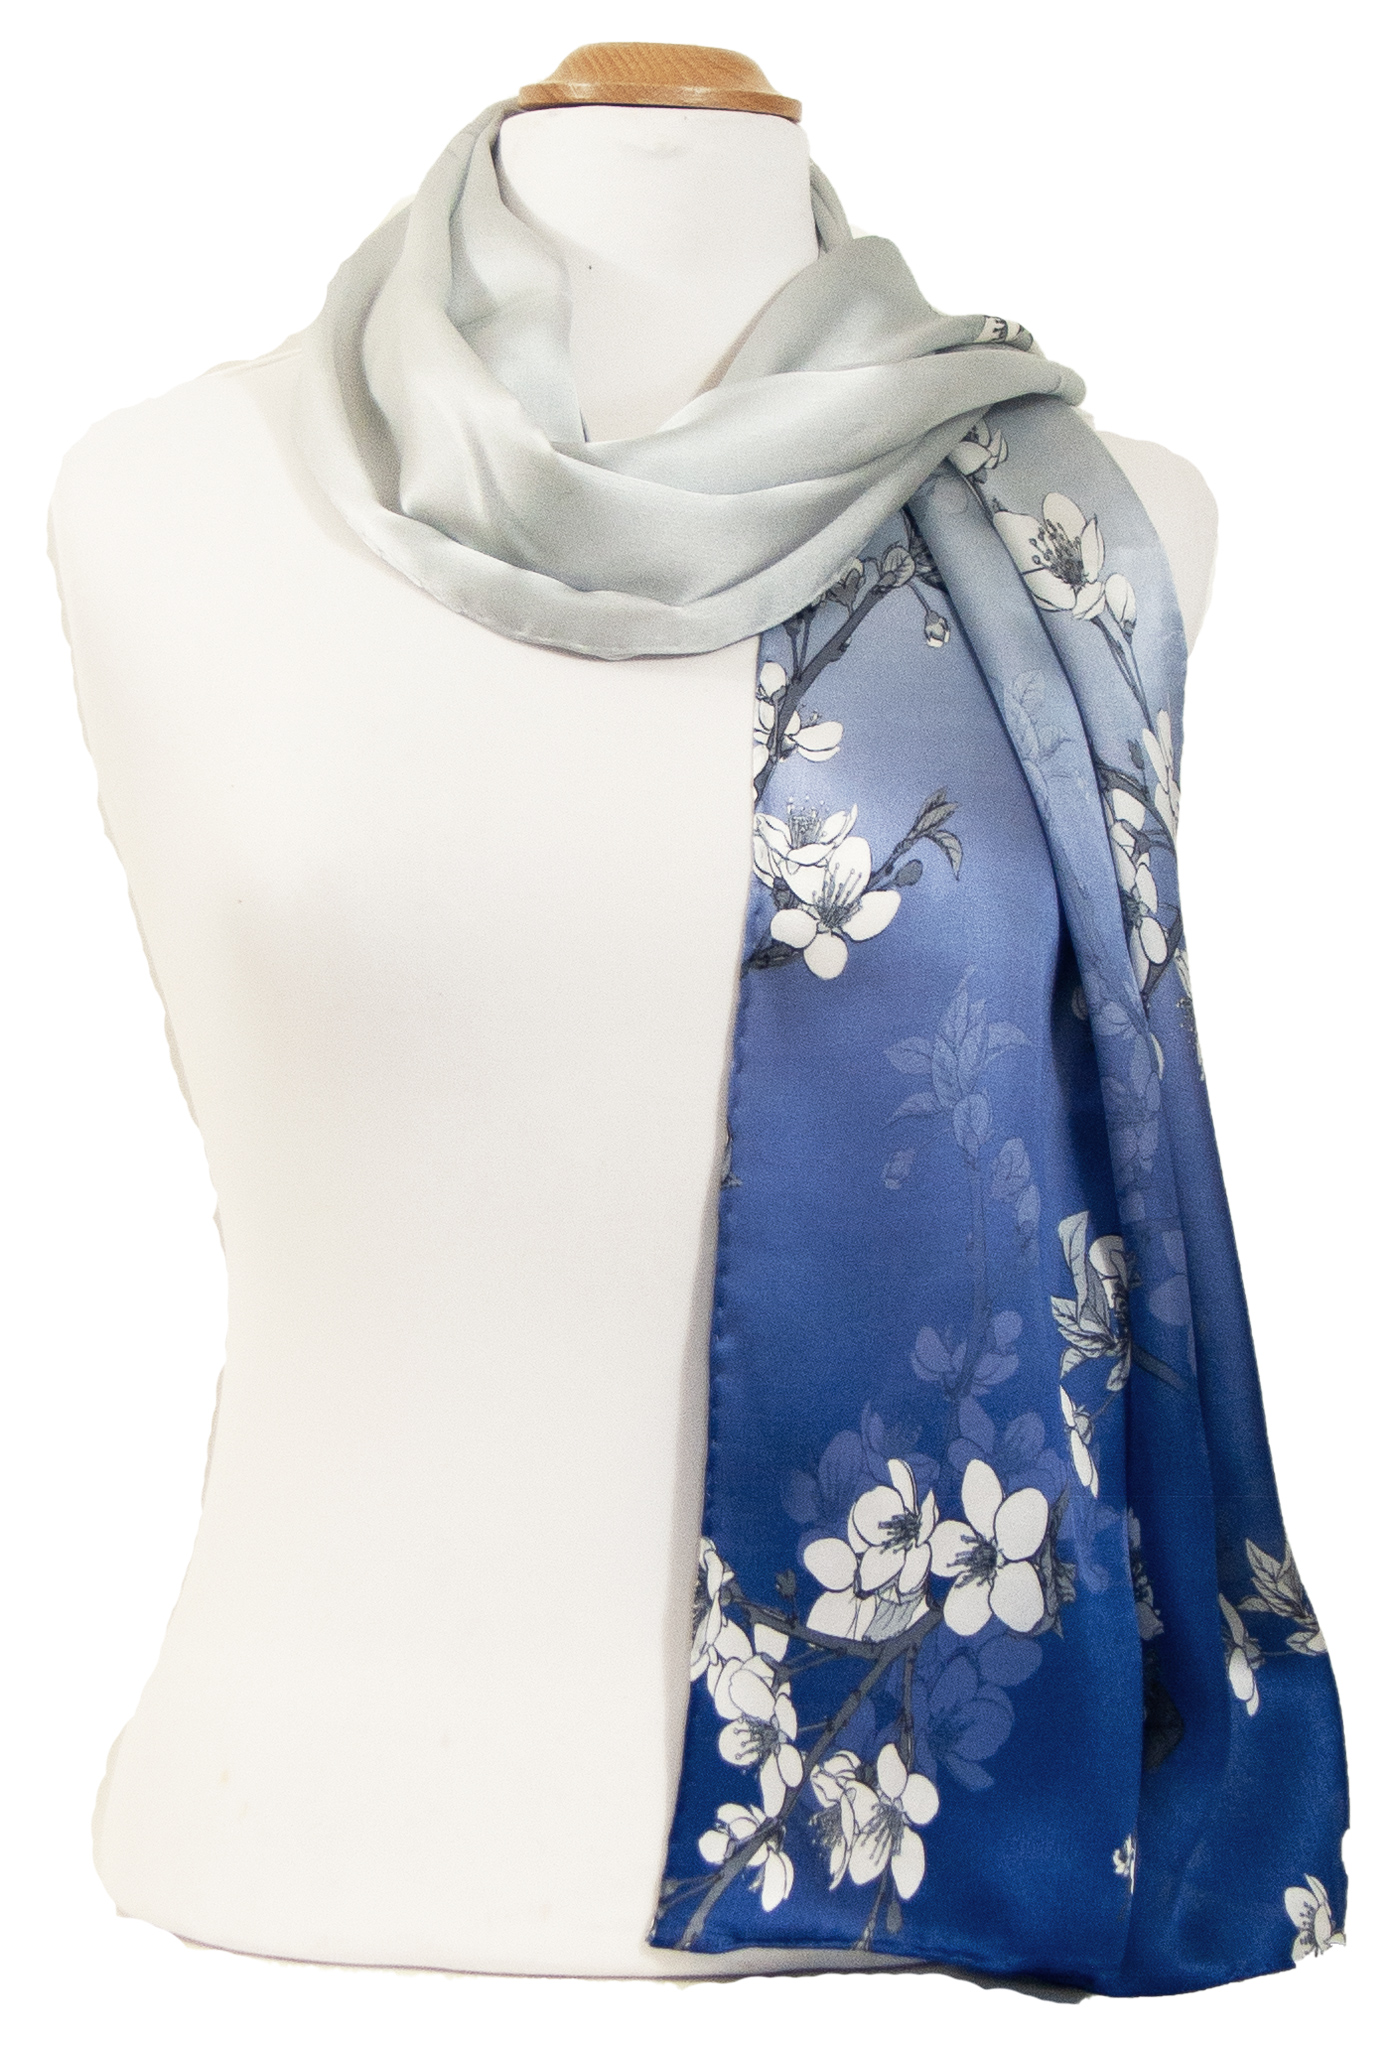 foulard écharpe soie femme bleu fleurs de cerisier